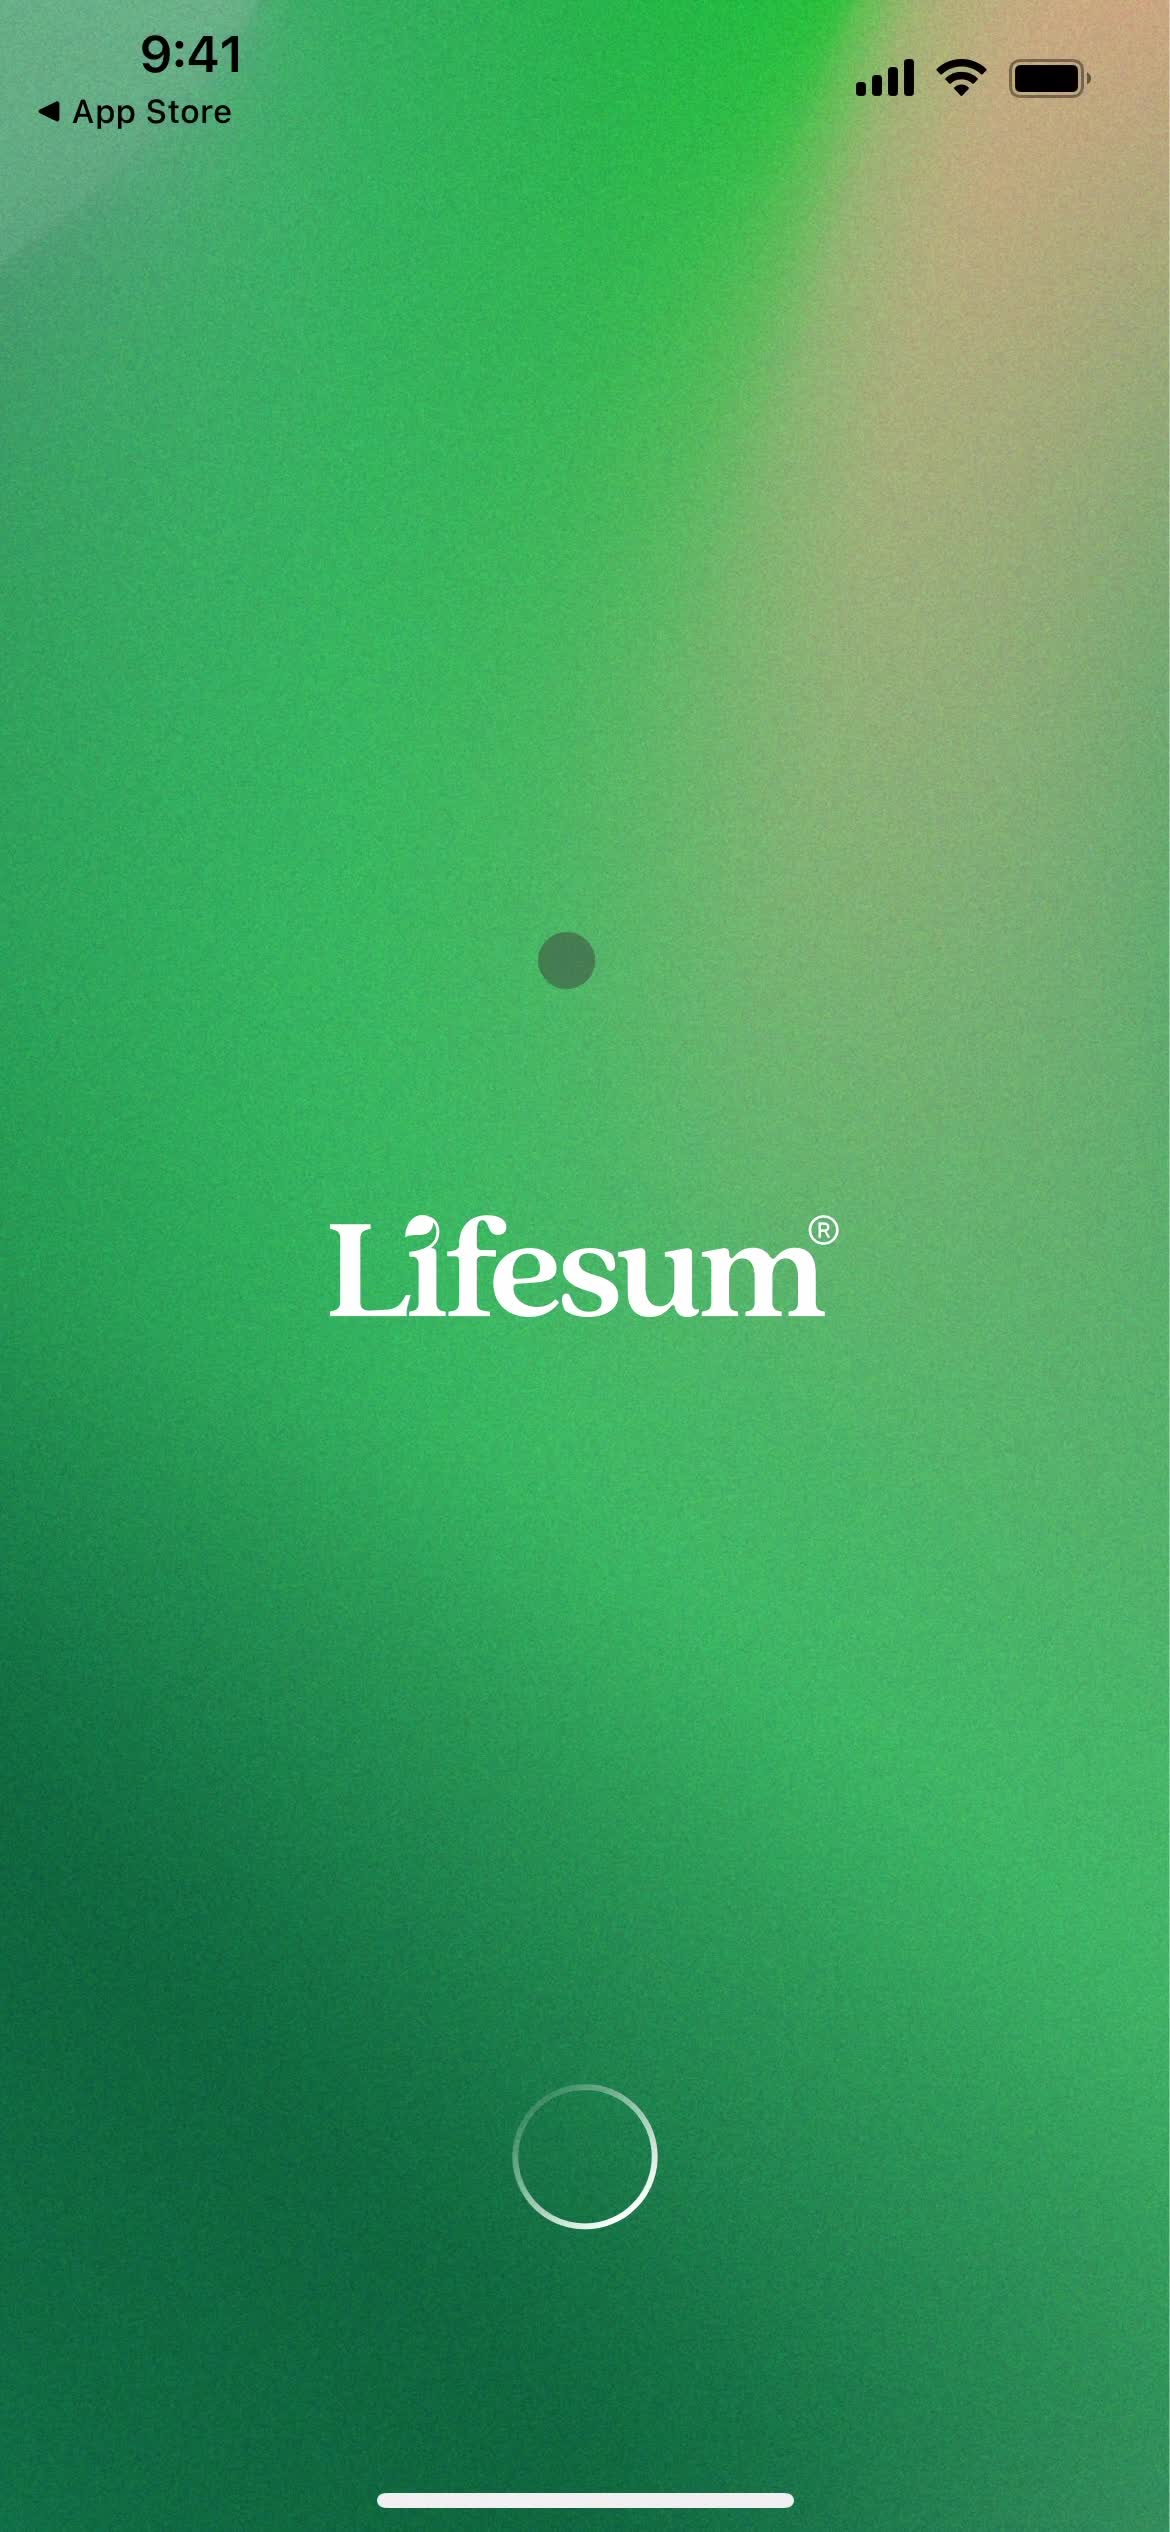 Lifesum splash screen screenshot